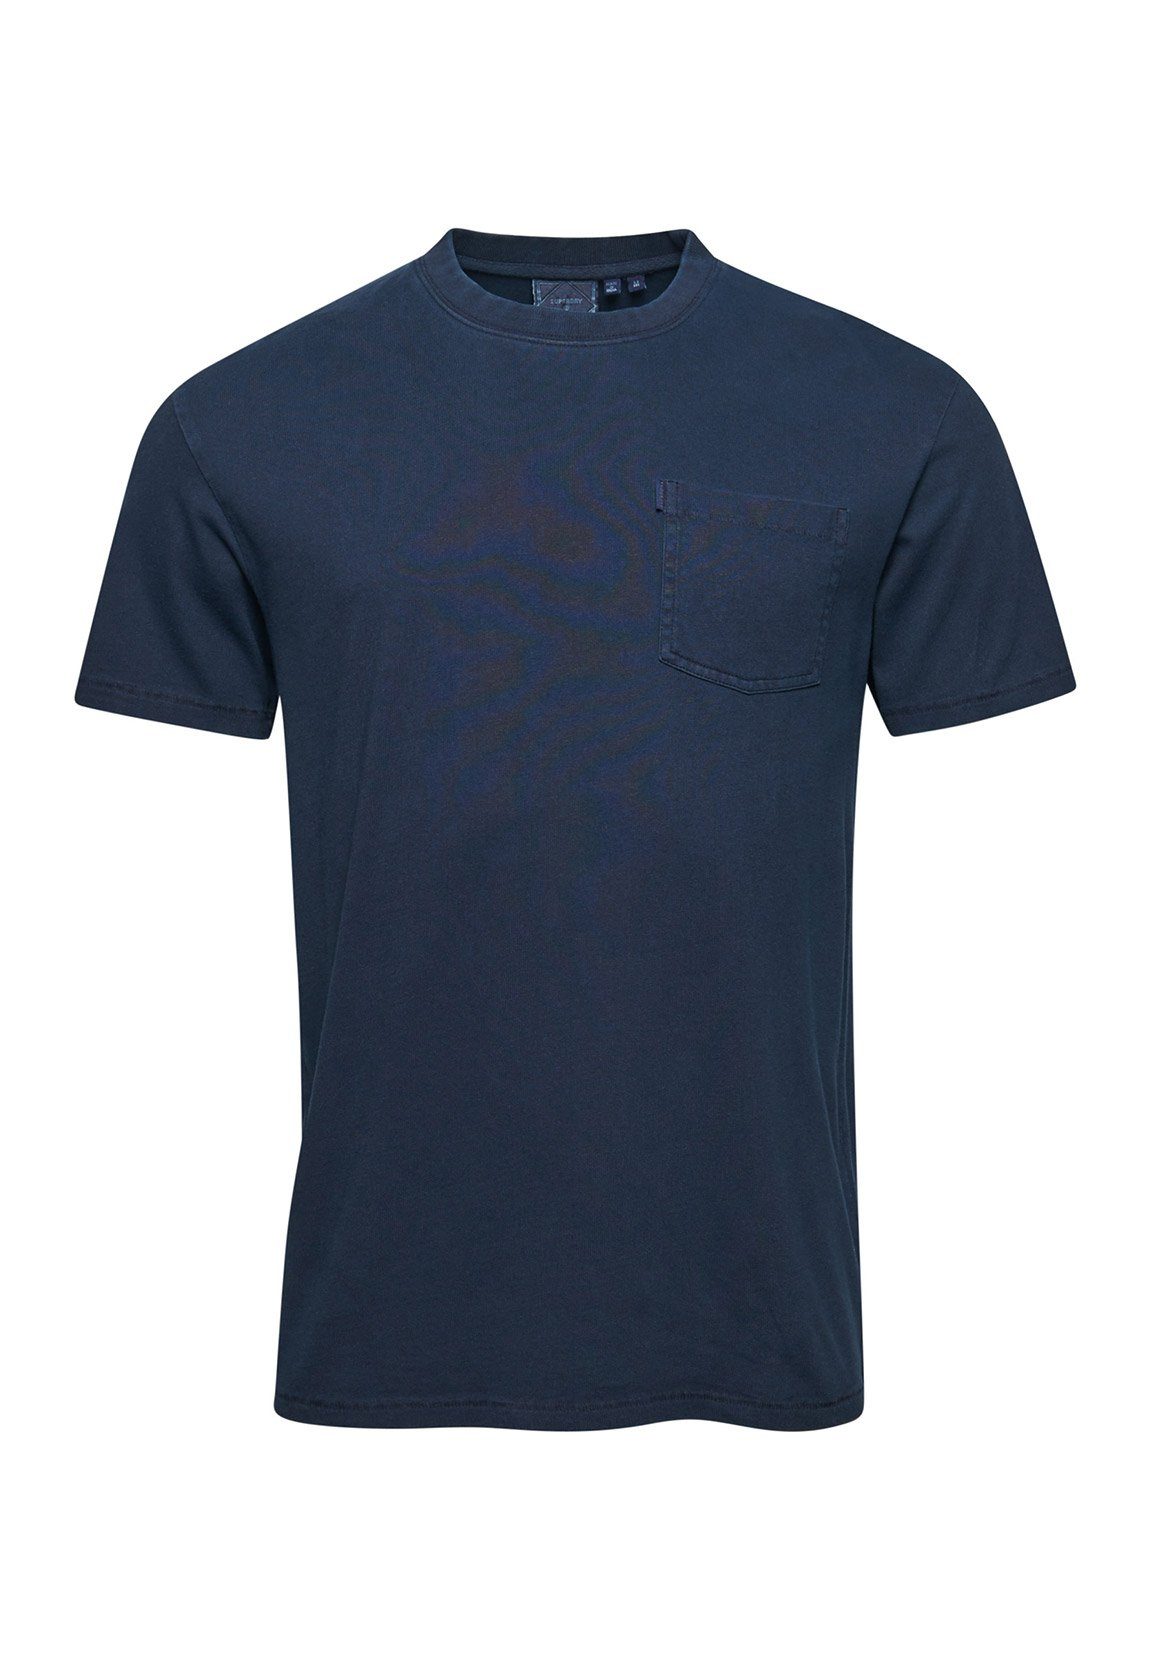 Superdry T-Shirt Superdry Navy Dunkelblau POCKET WORKWEAR Nautical Herren T-Shirt TEE